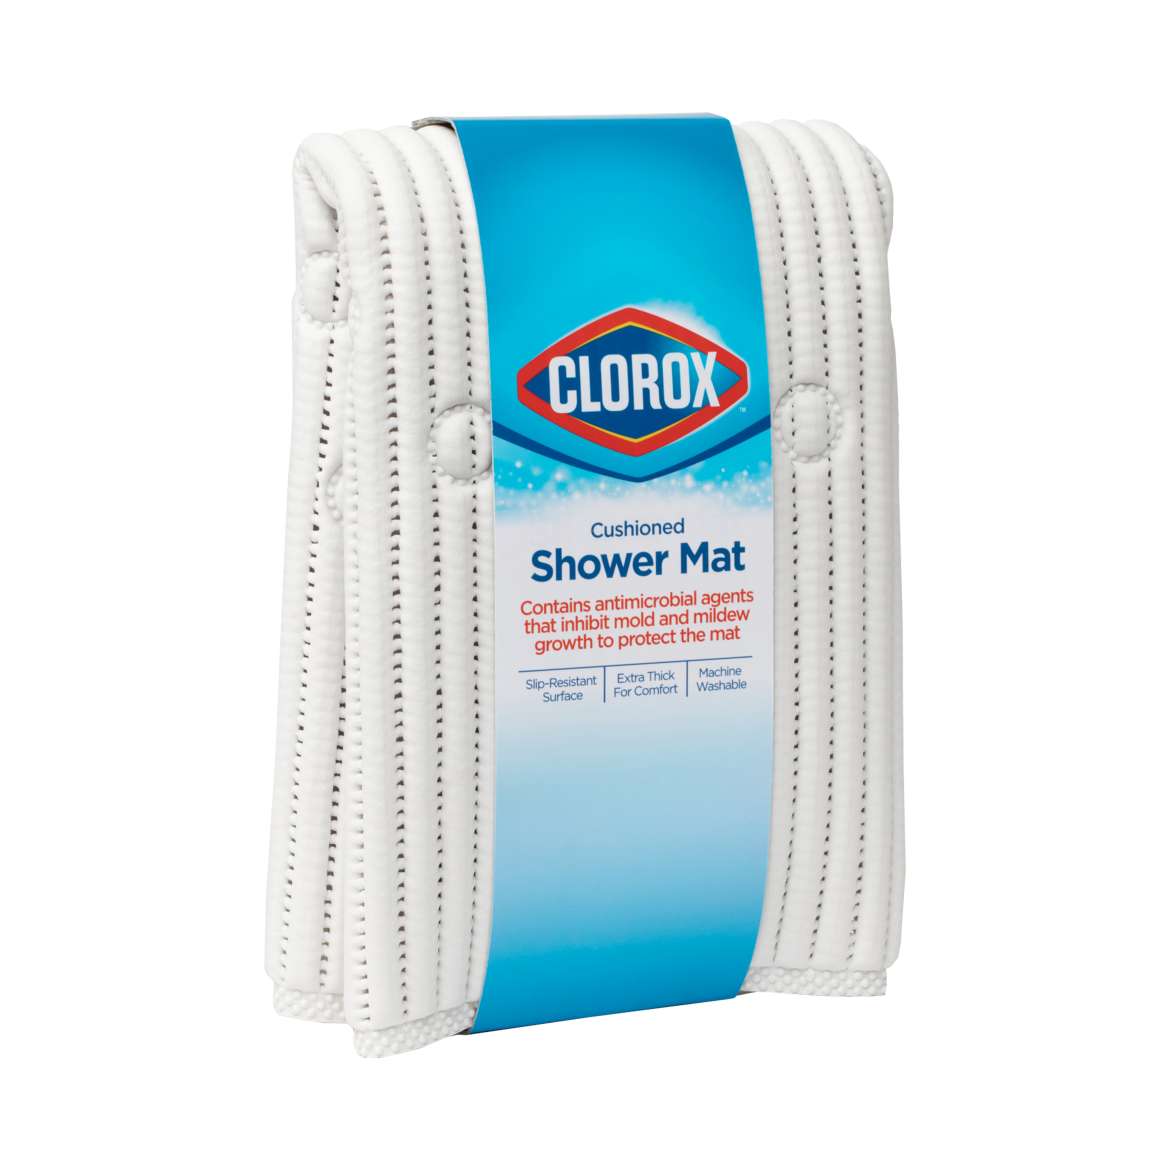 Clorox™ Cushioned Shower Mat Image